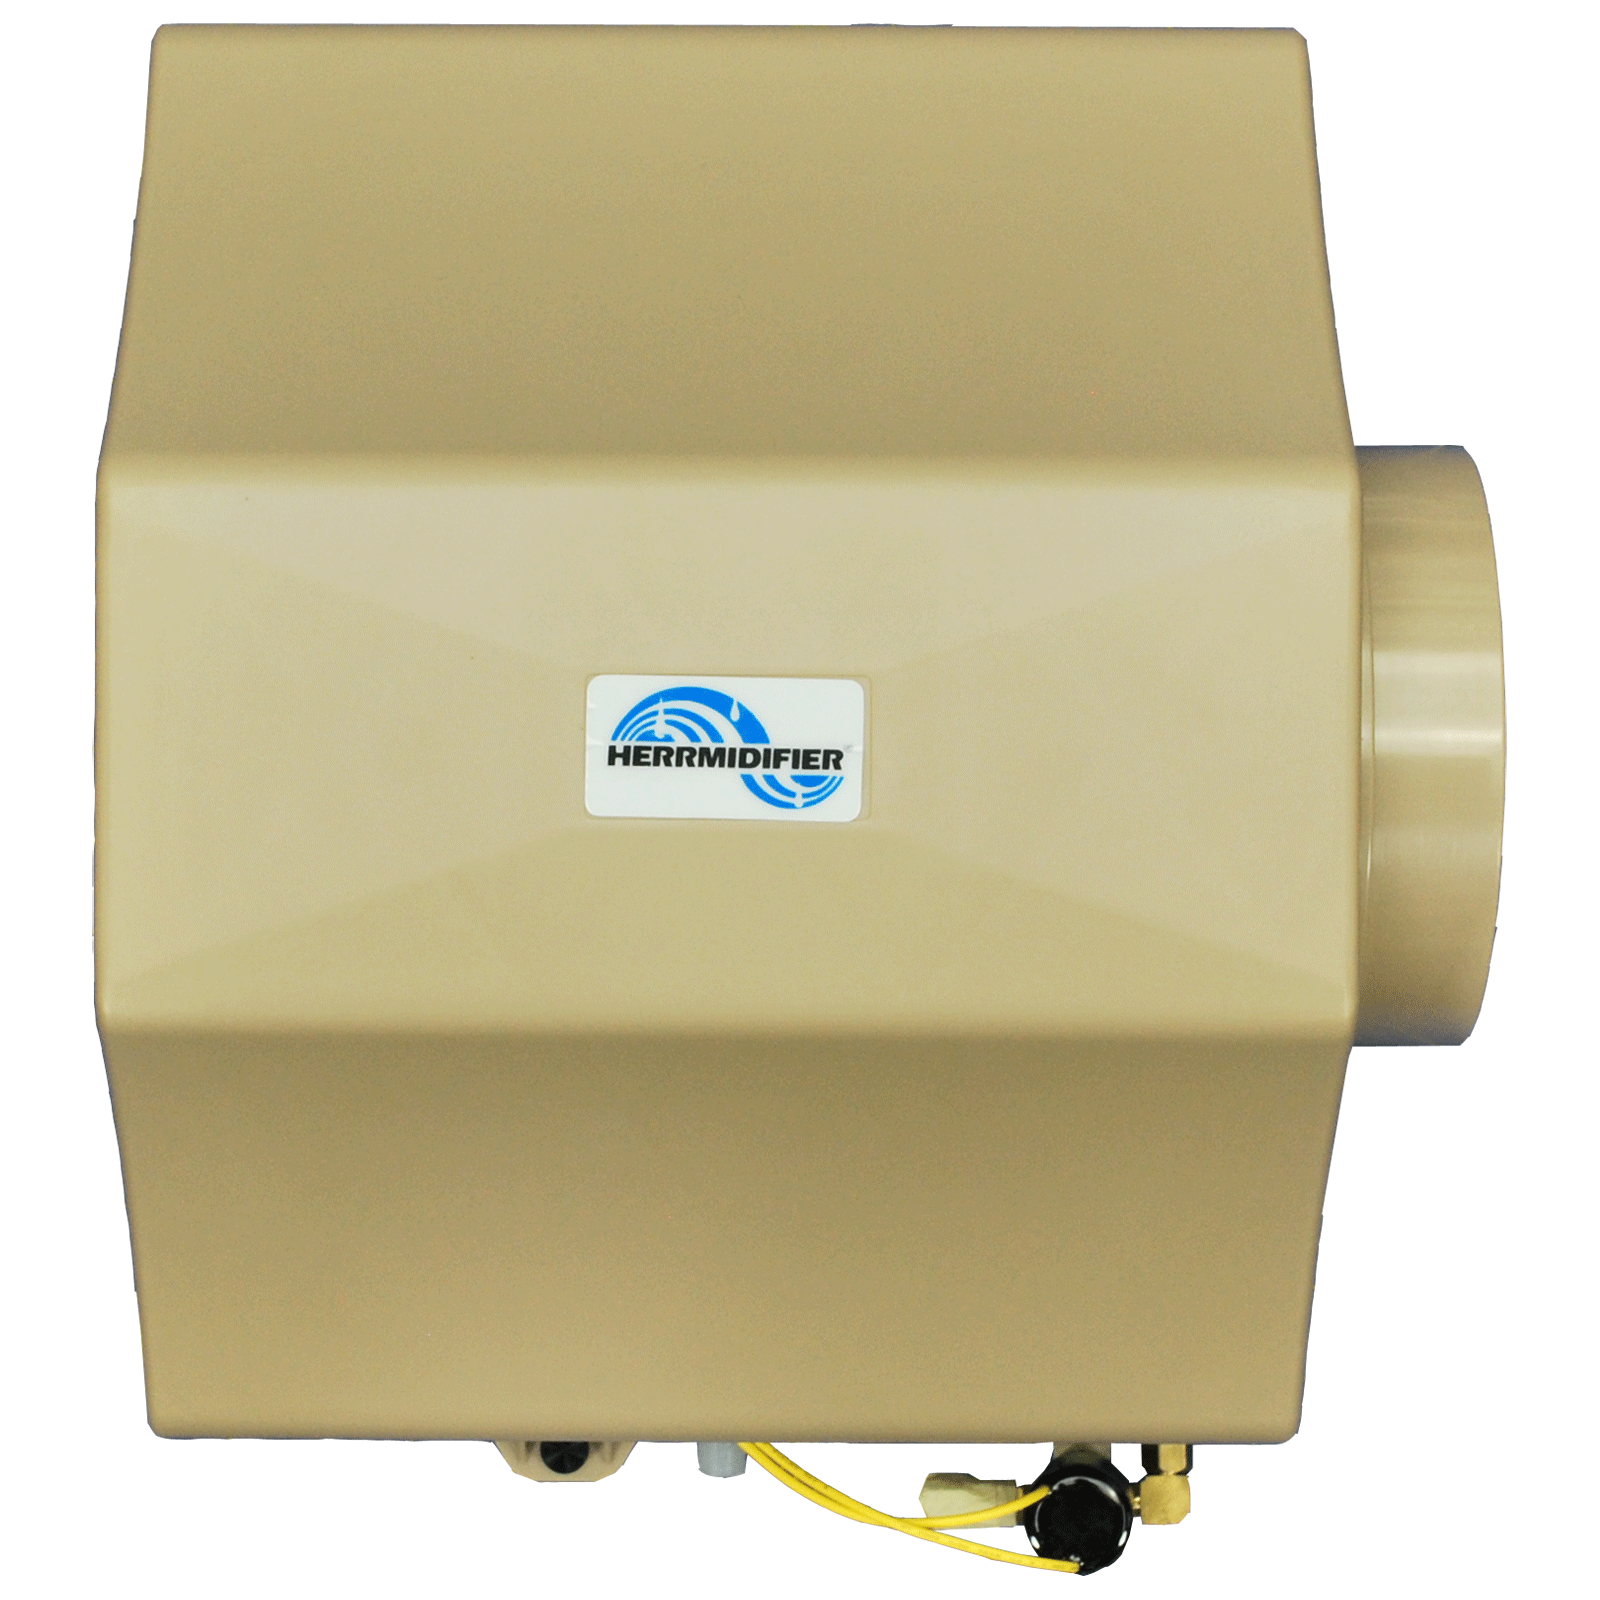 Herrmidifier G-200 Bypass Style Humidifier